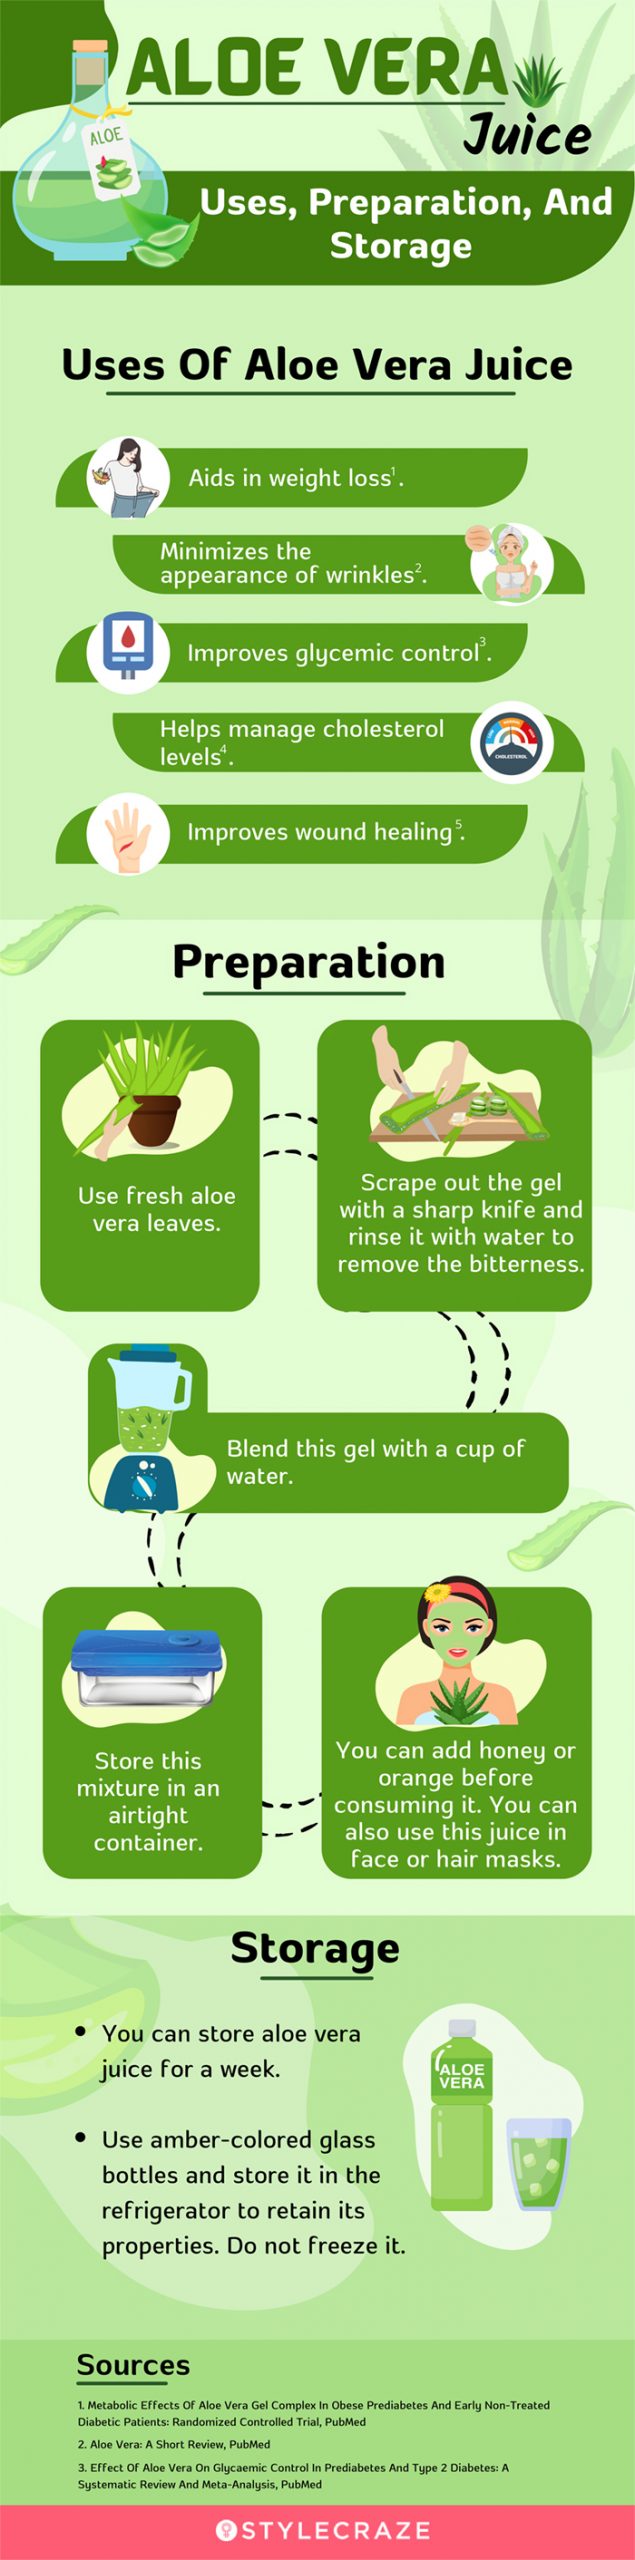 aloe vera juice uses preparation and storage (infographic)